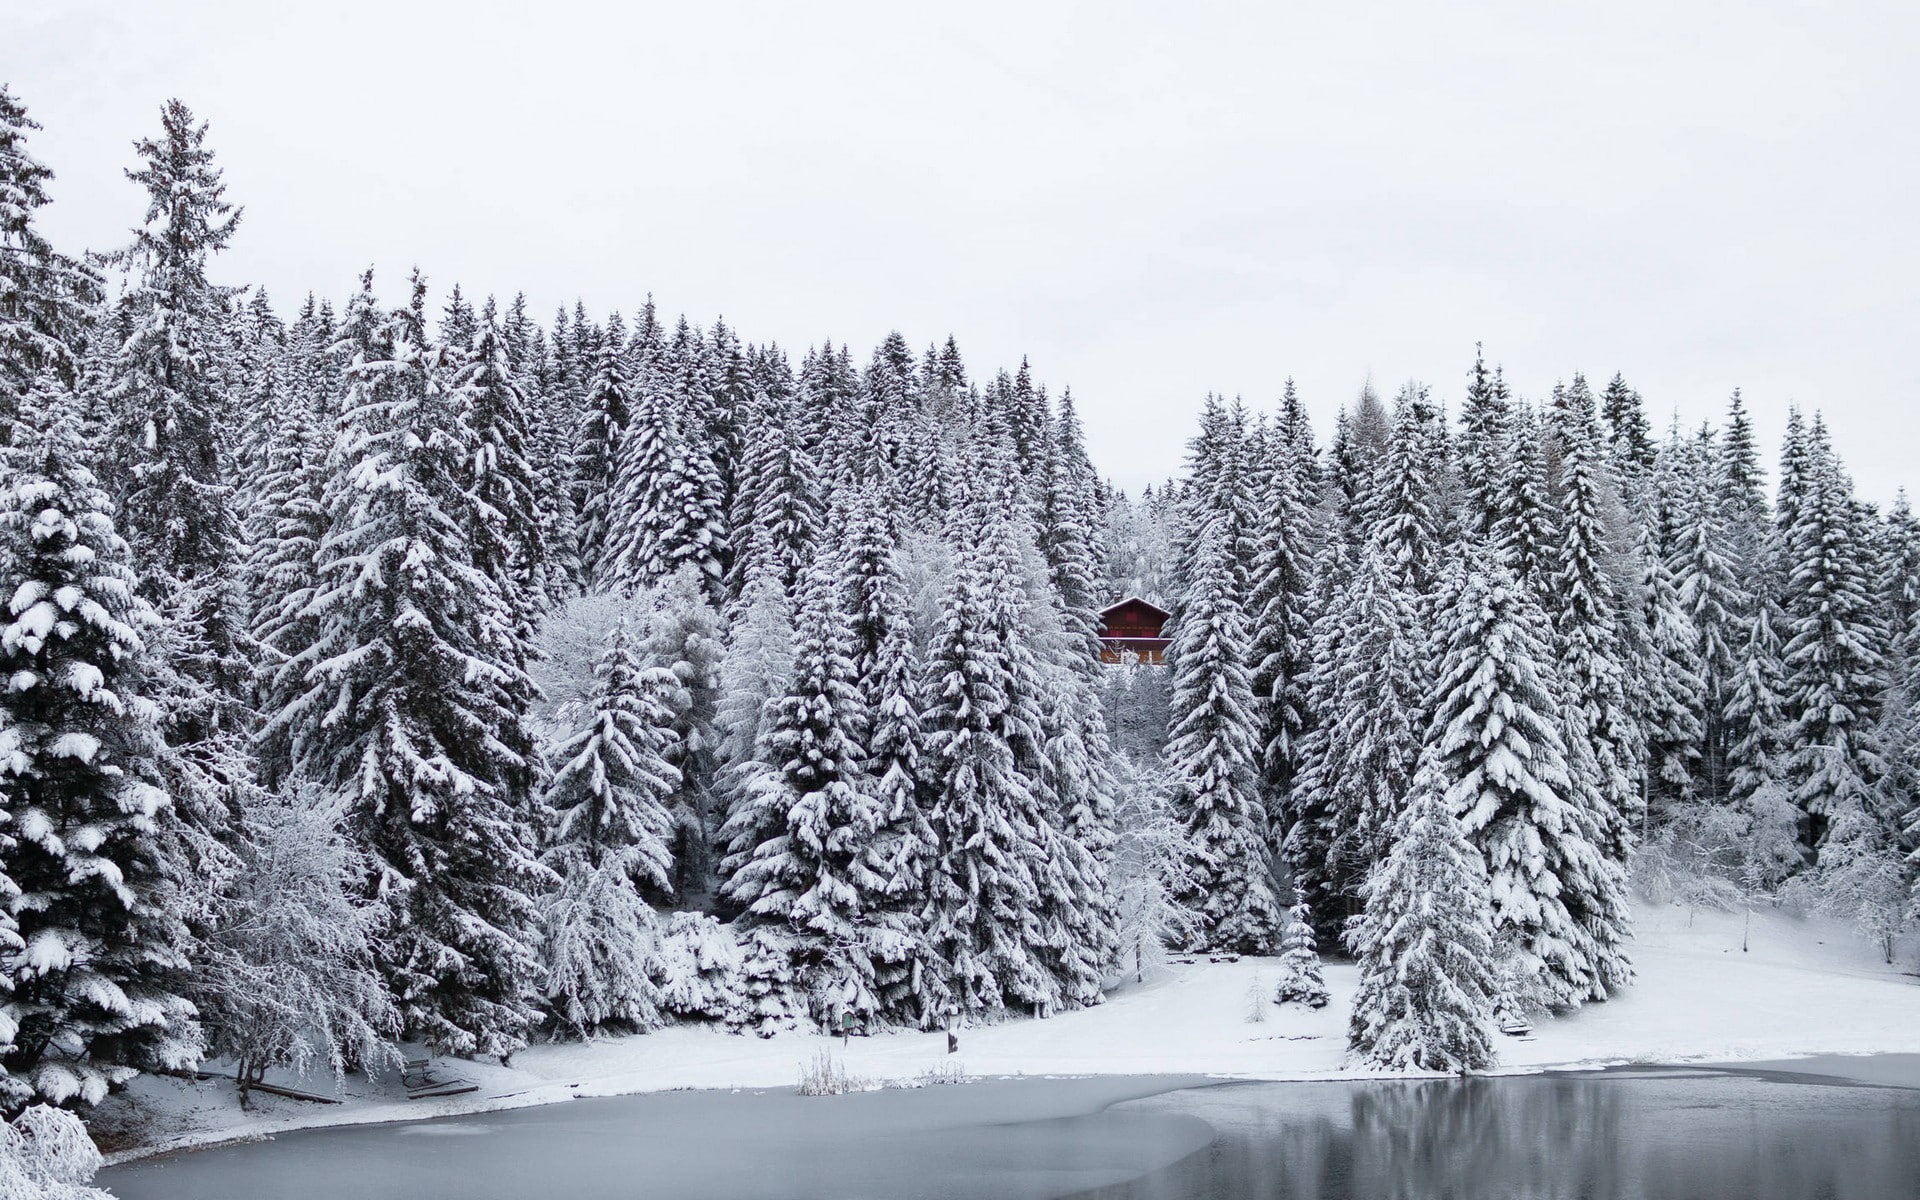 snow, winter, pine trees, lake, ice, cold temperature, plant